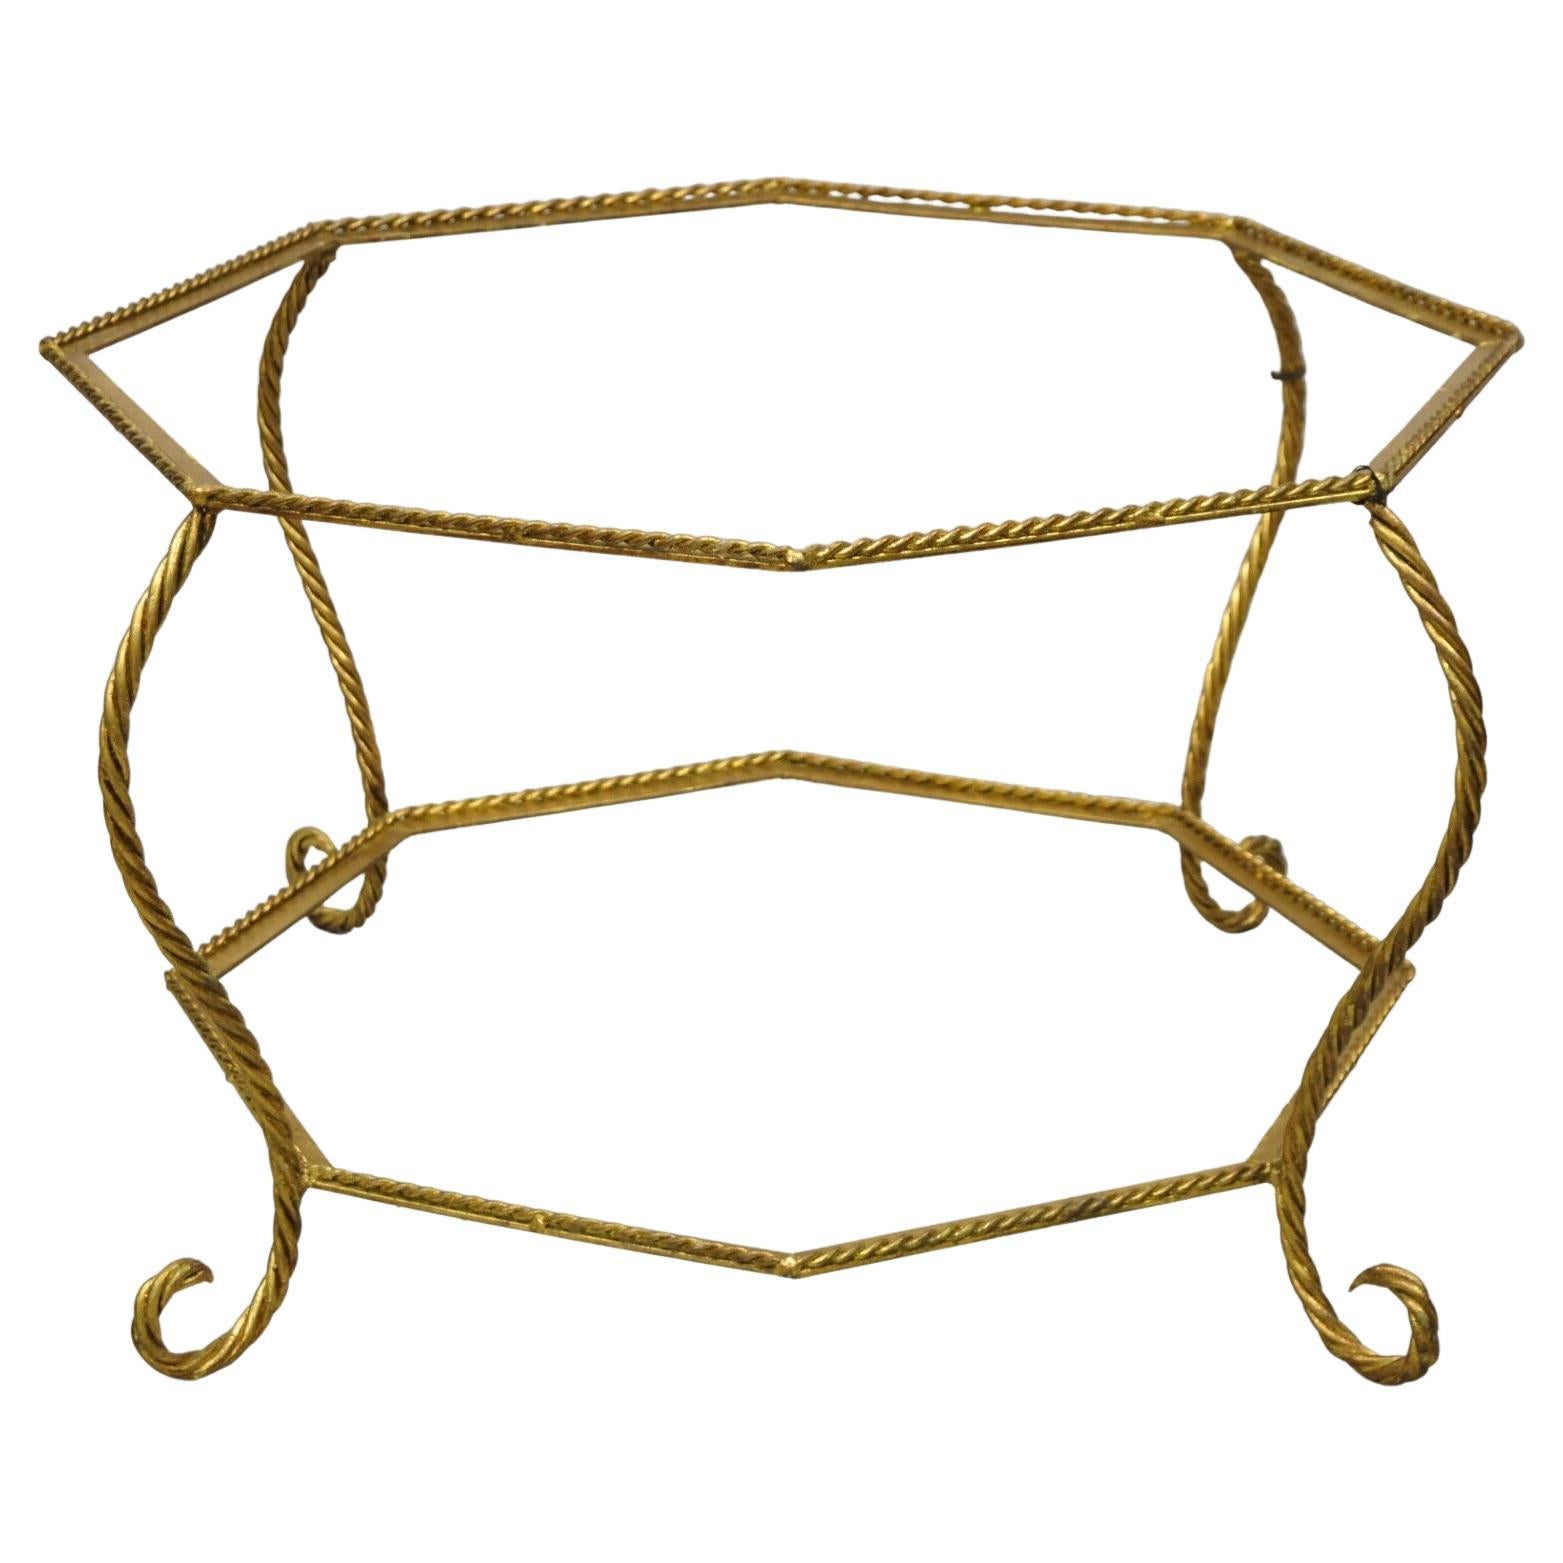 Base de table basse italienne vintage Hollywood Regency en fer doré et corde métallique